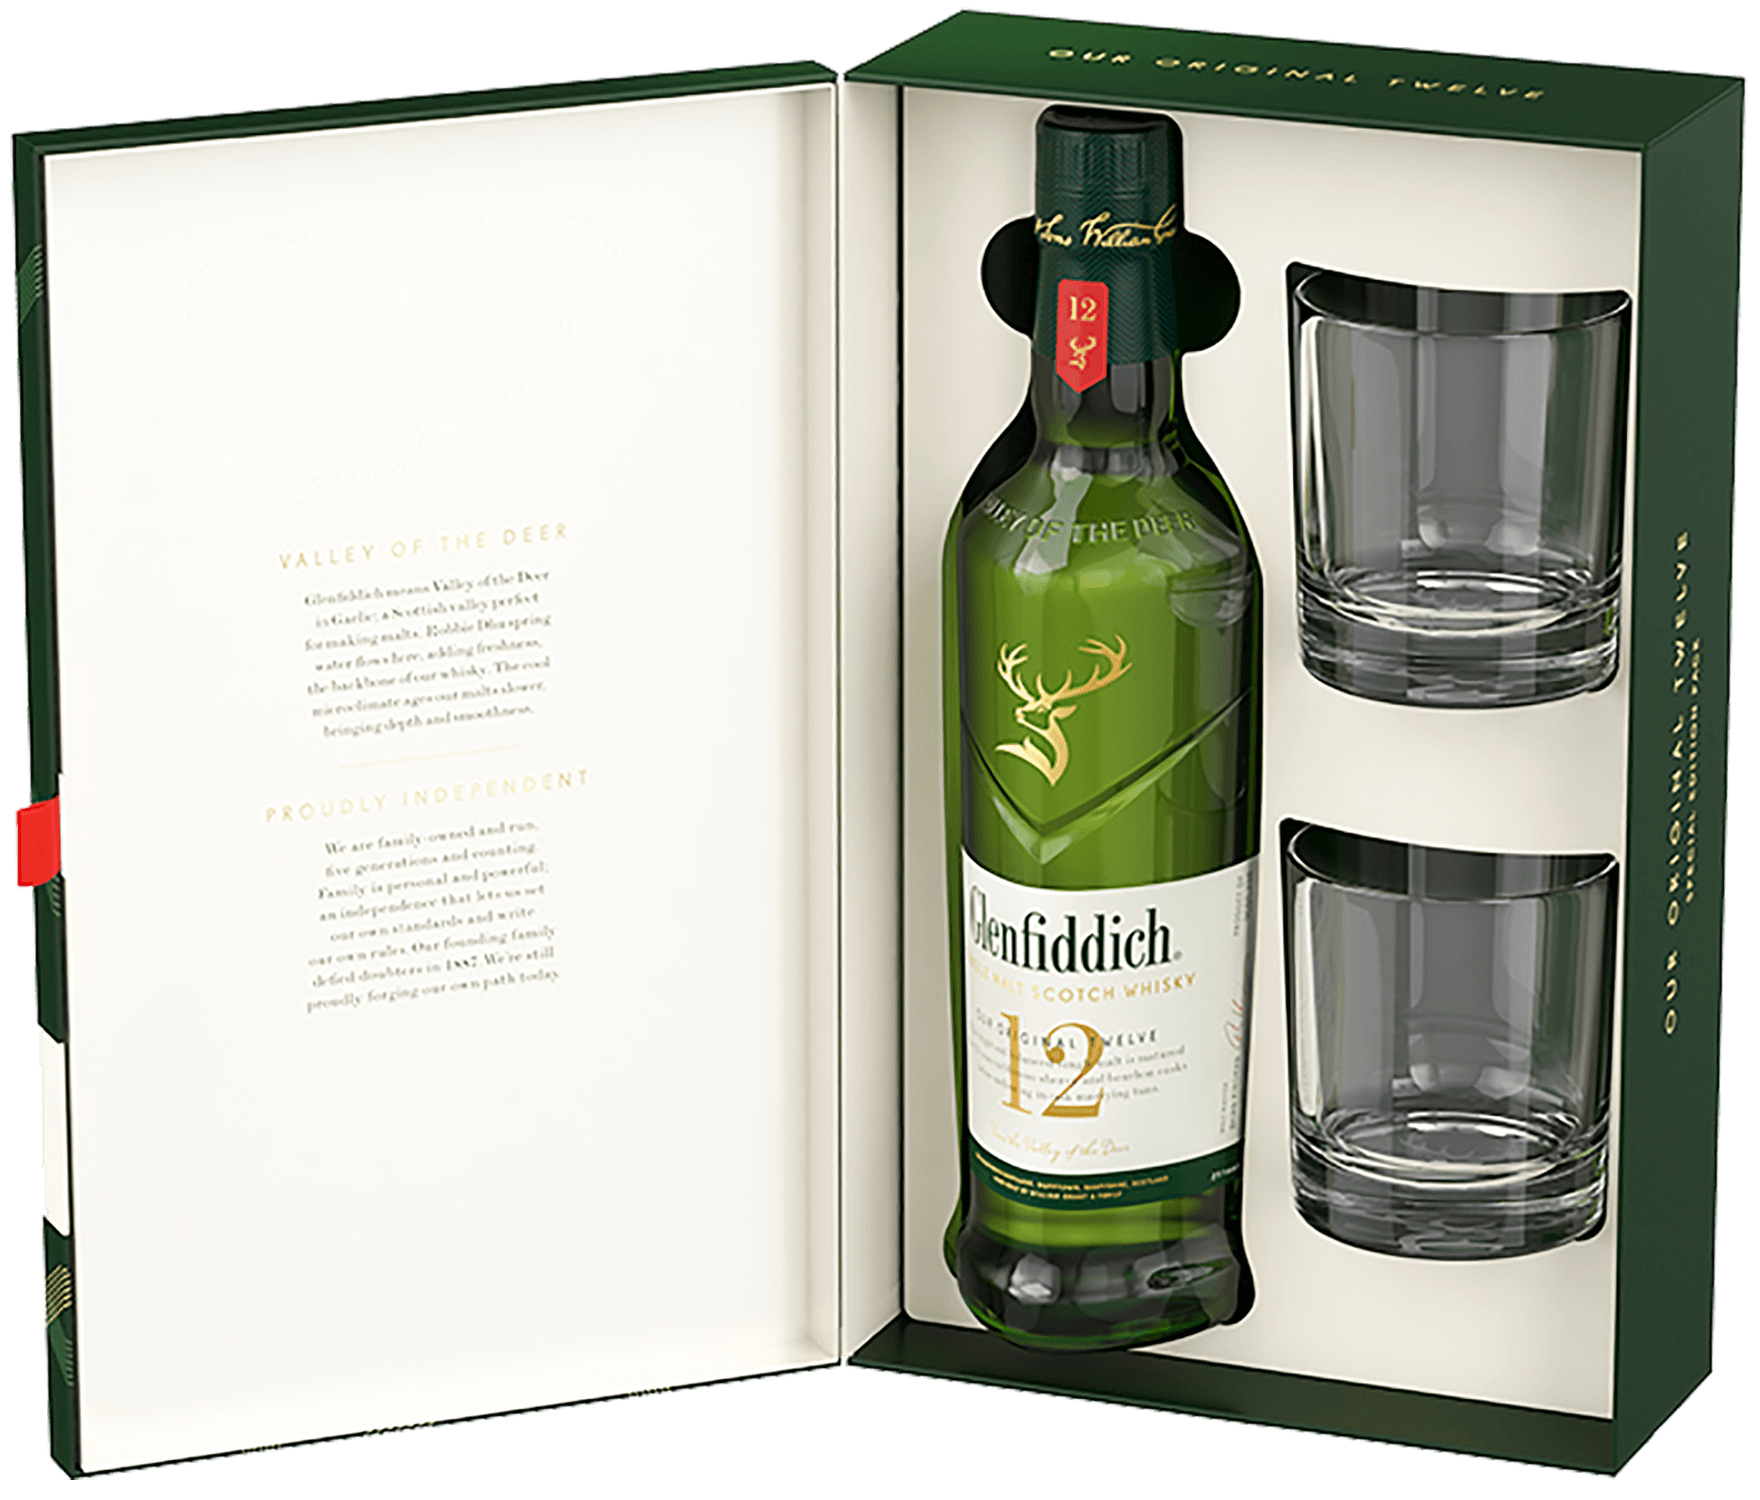 Glenfiddich Single Malt Scotch Whisky 12 y.o. (gift box with 2 glasses) the glenlivet founder s reserve single malt scotch whisky gift box with 2 glasses